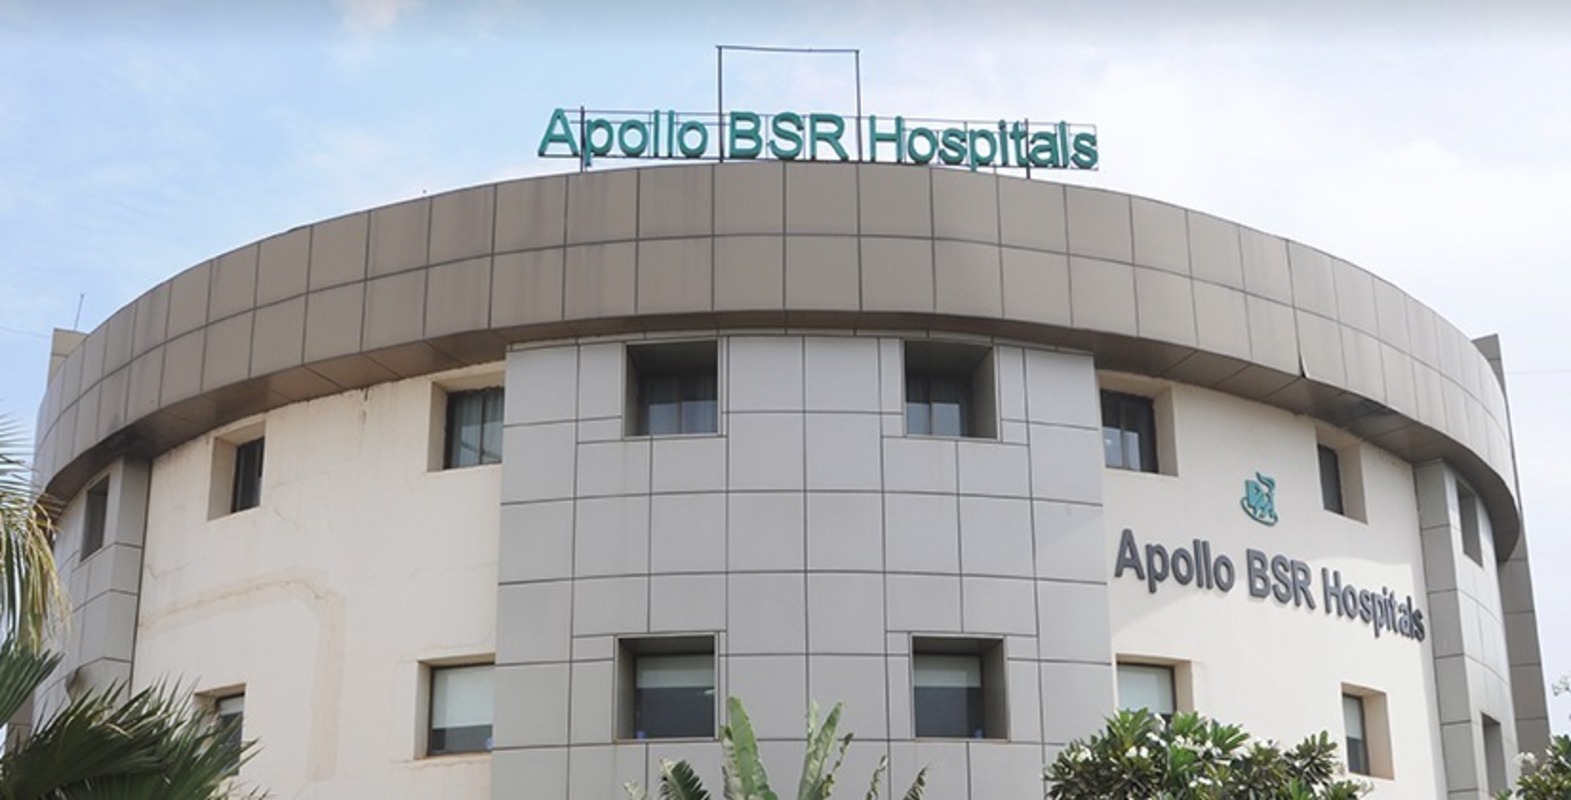 Apollo BSR Hospital